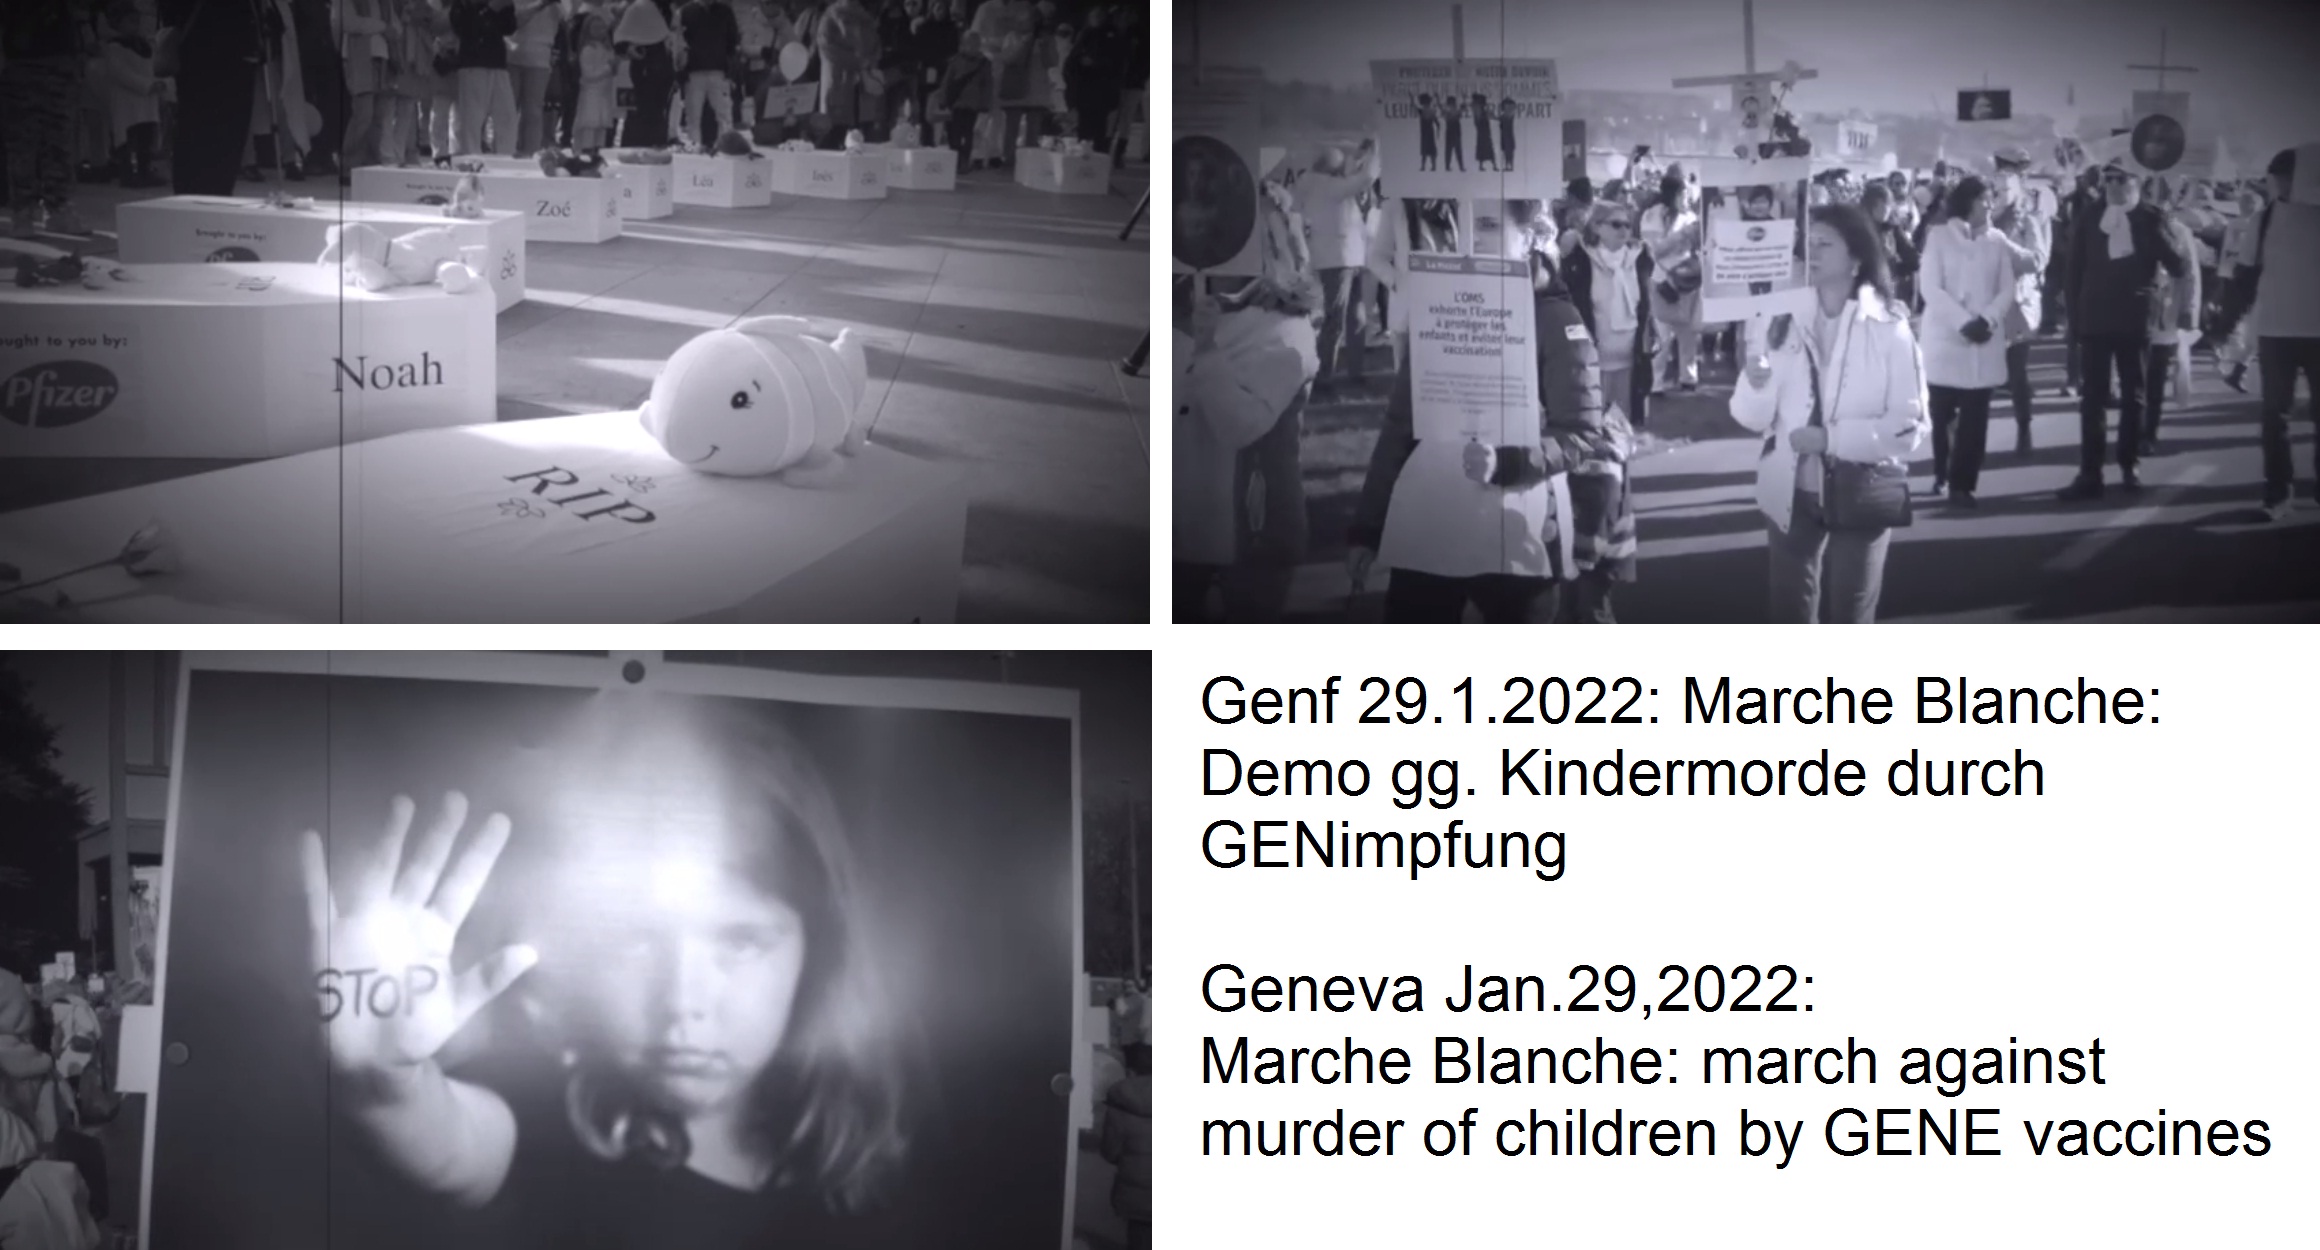 Video 29.1.2022: Demo Genf gg.
                            Kindermorde duch GENimpfung - Geneva march
                            ag child murder by GENE vaccines (1'33'')